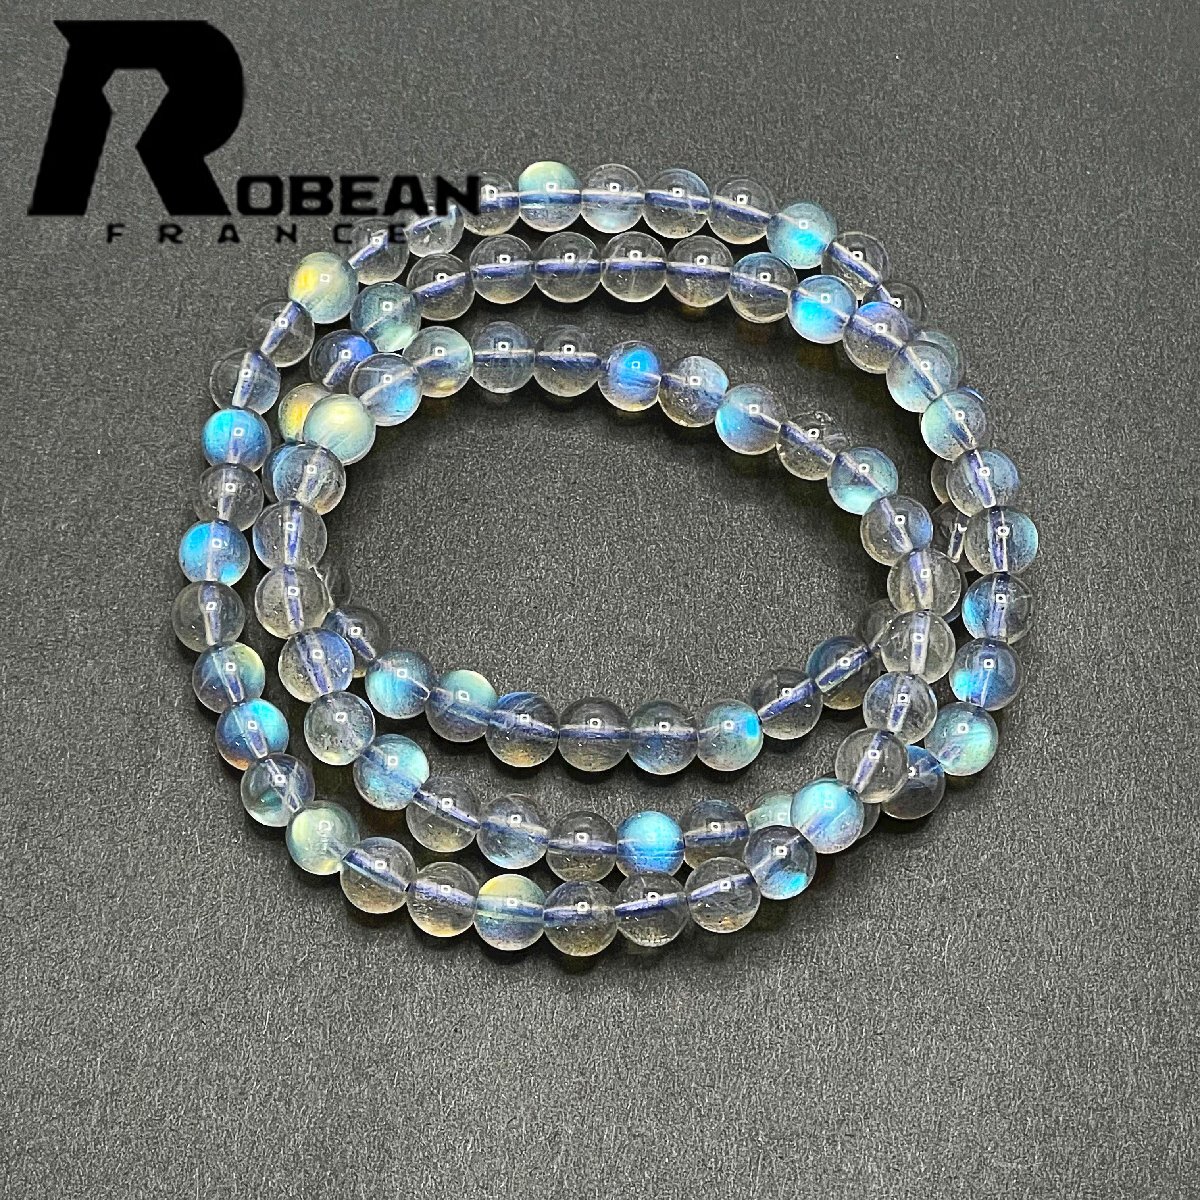  dream color EU made regular price 8 ten thousand jpy *ROBEAN* moonstone * Power Stone bracele accessory 3ps.@ to coil bracele ..6-6.5mm 1001G1141